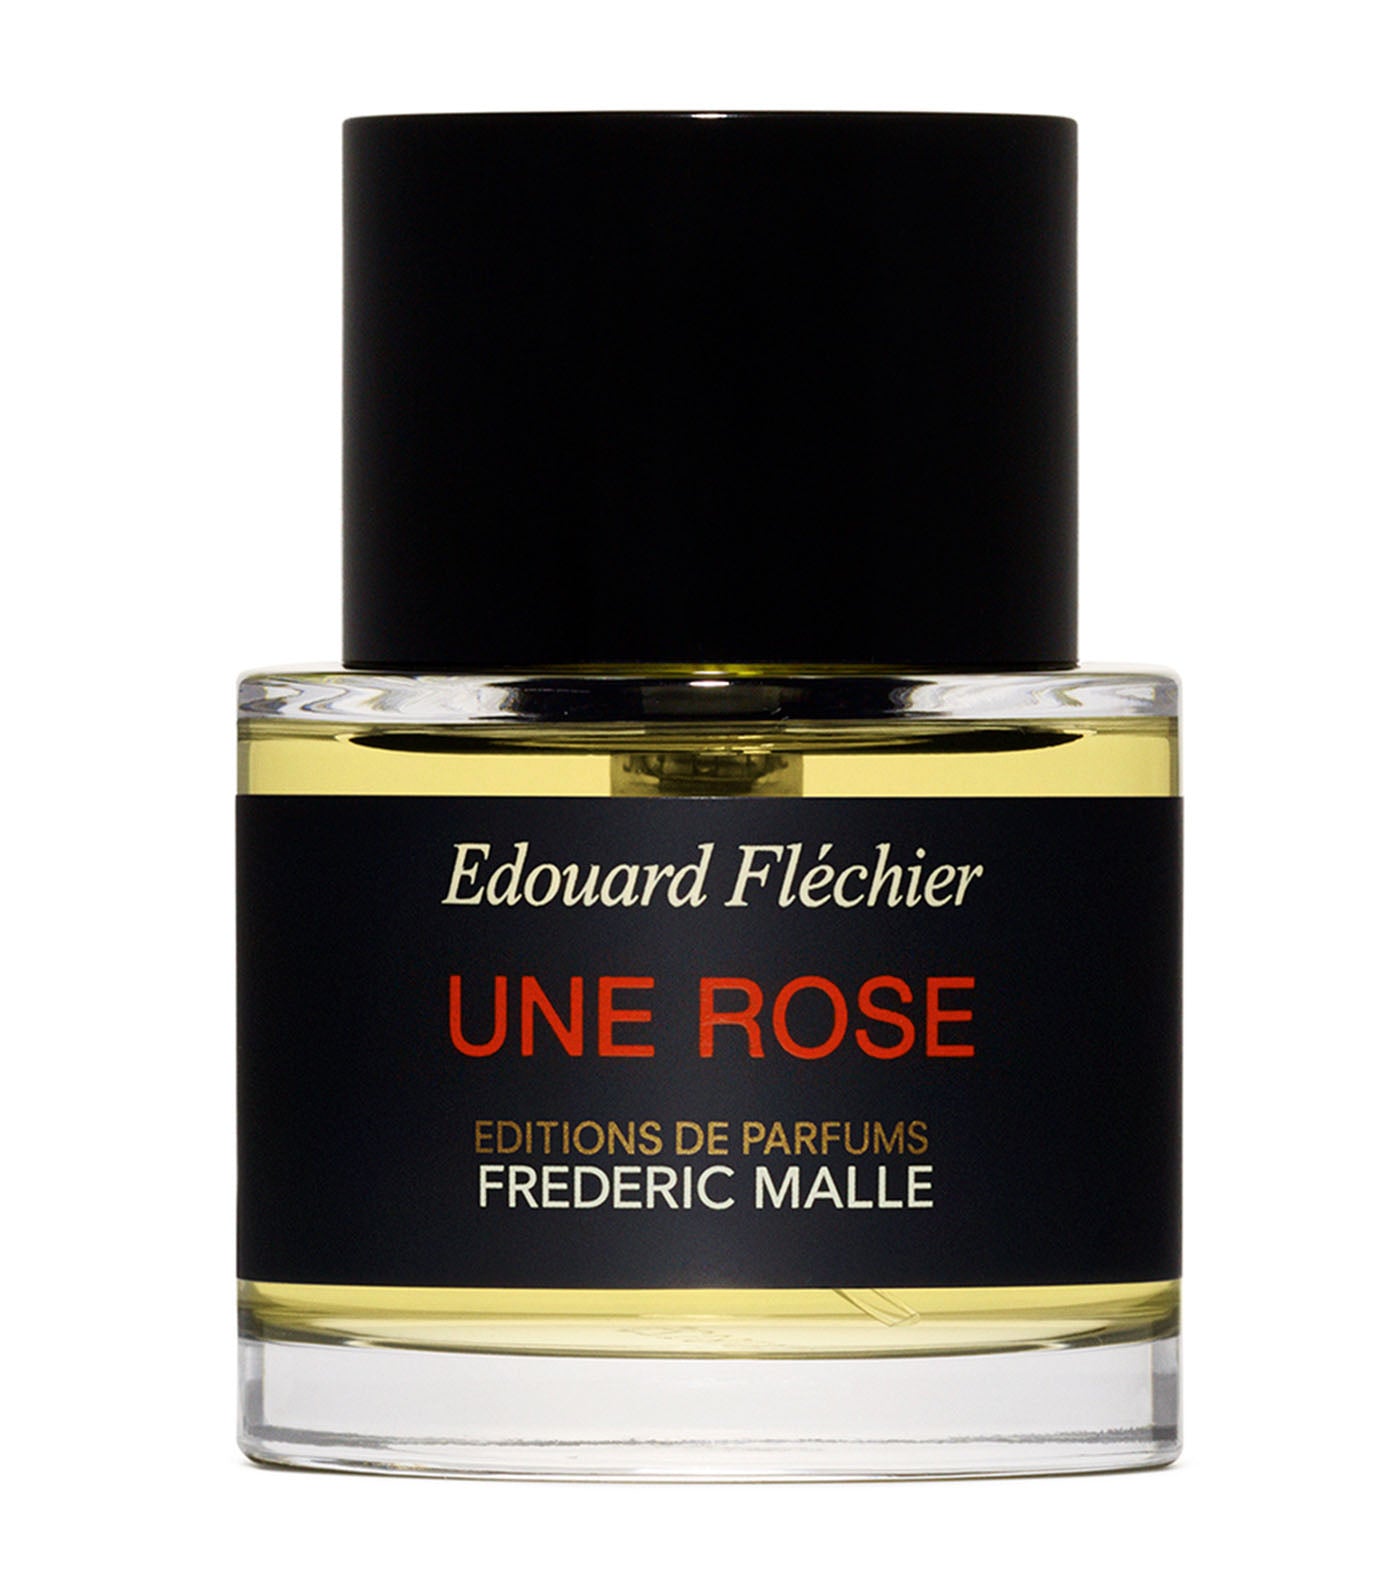 Une Rose Perfume by Edouard Fléchier